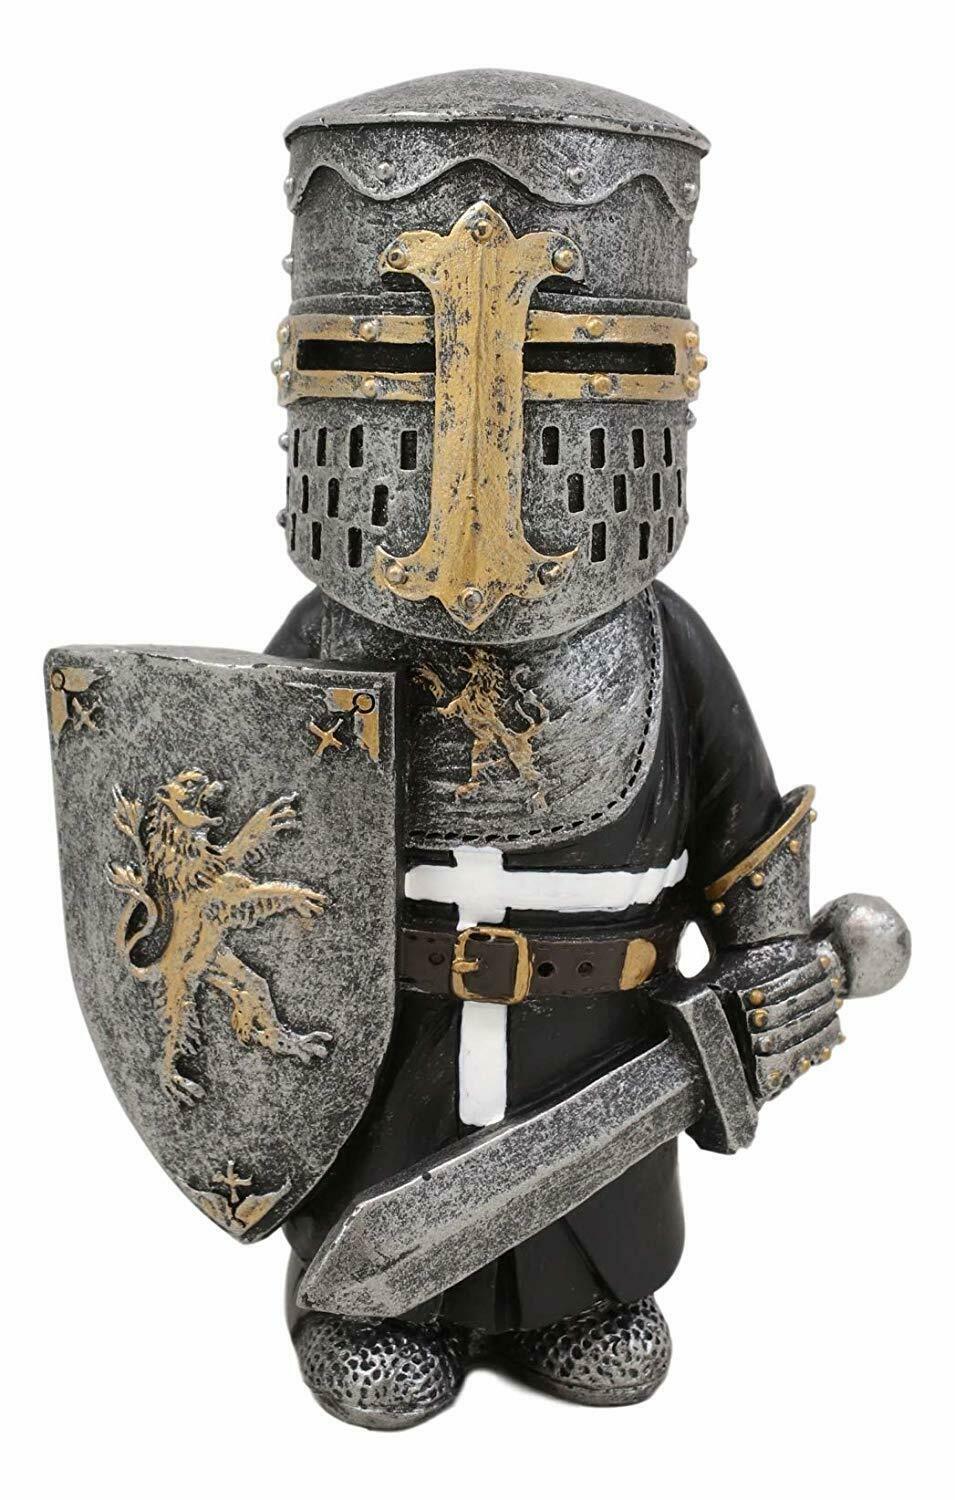 Chibi Medieval Knight Of The Cross Templar Crusader Armored Swordsman Figurine